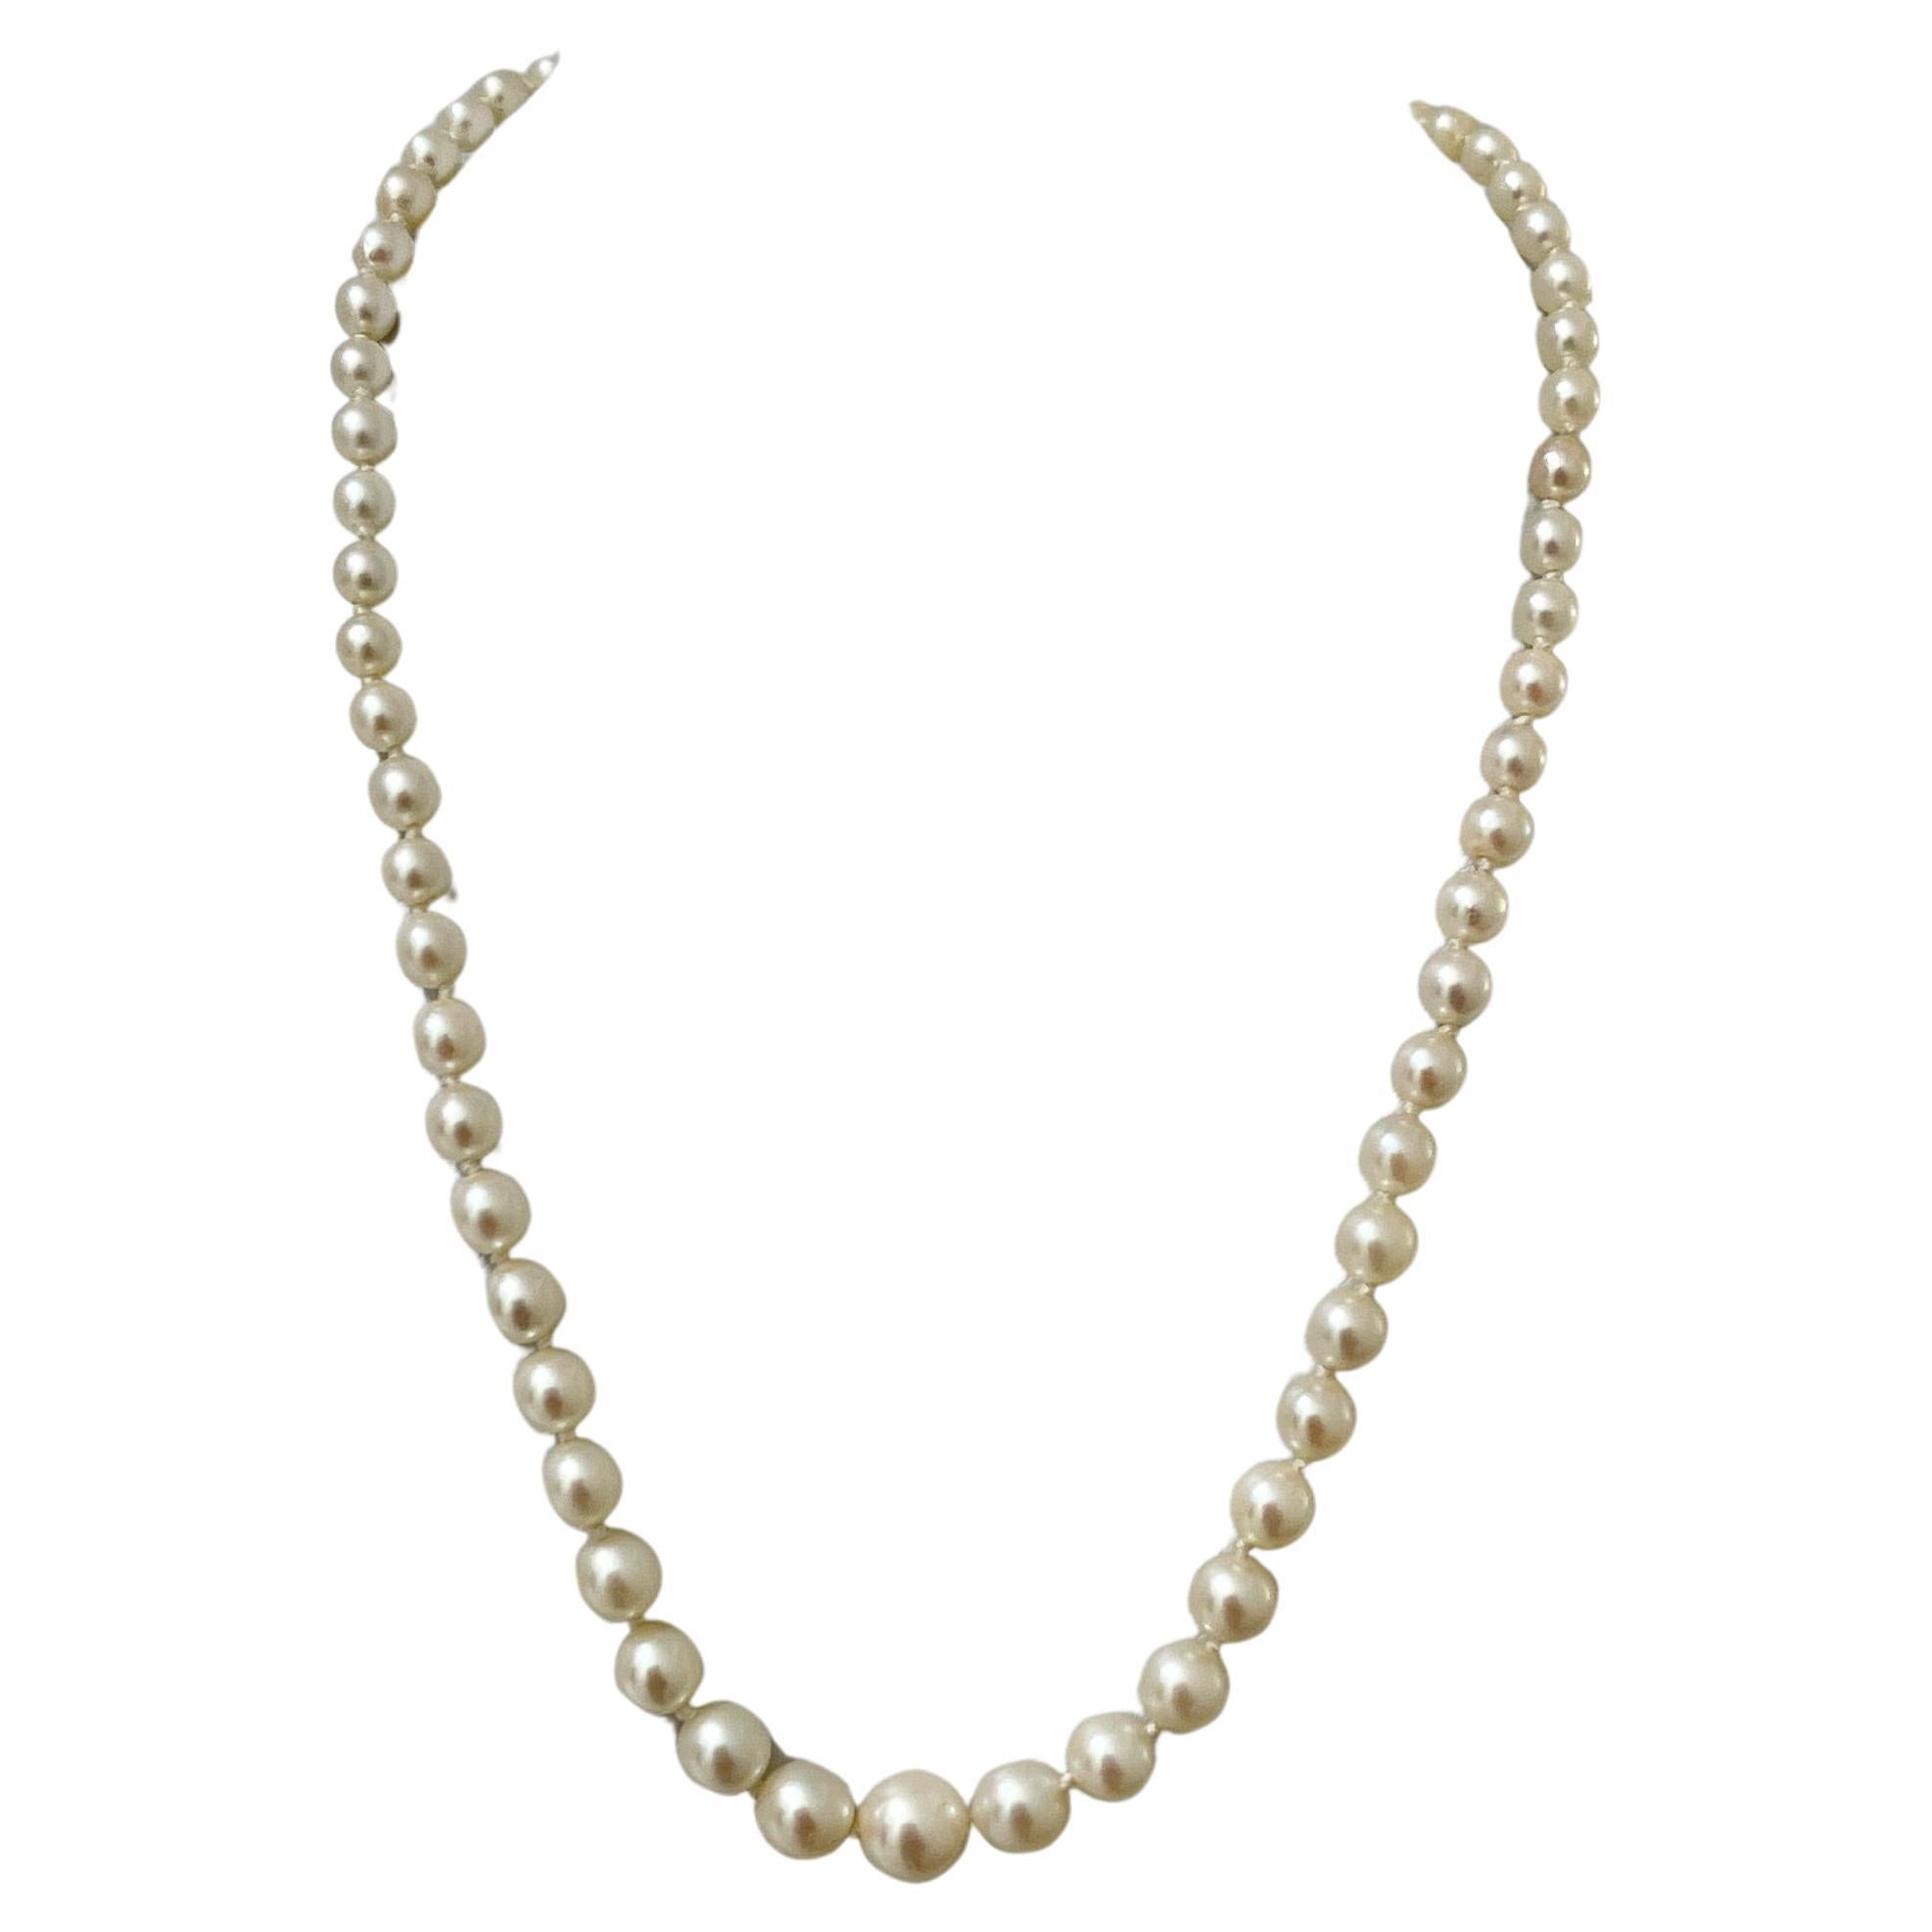 Vintage Mikimoto Graduated Akoya Pearl Strand Necklace Silver Clasp 